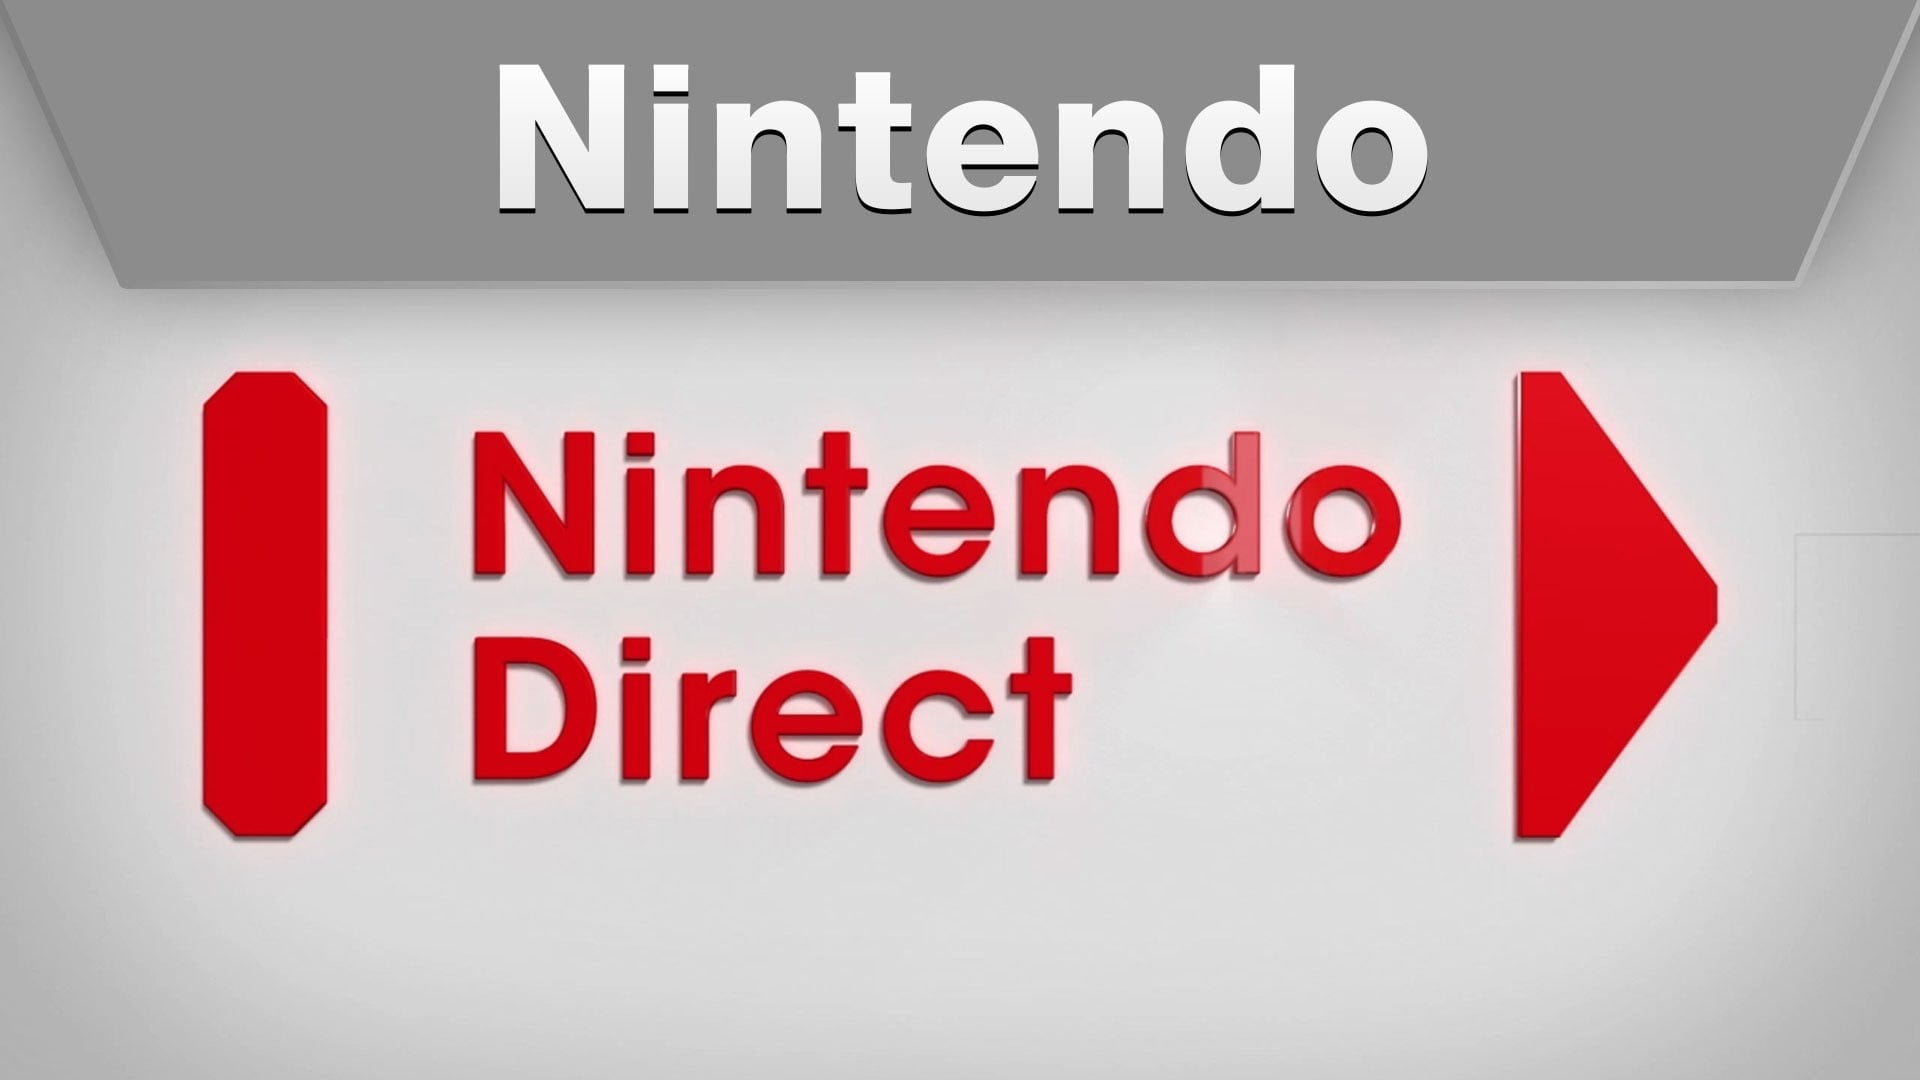 Nintendo Direct illustration